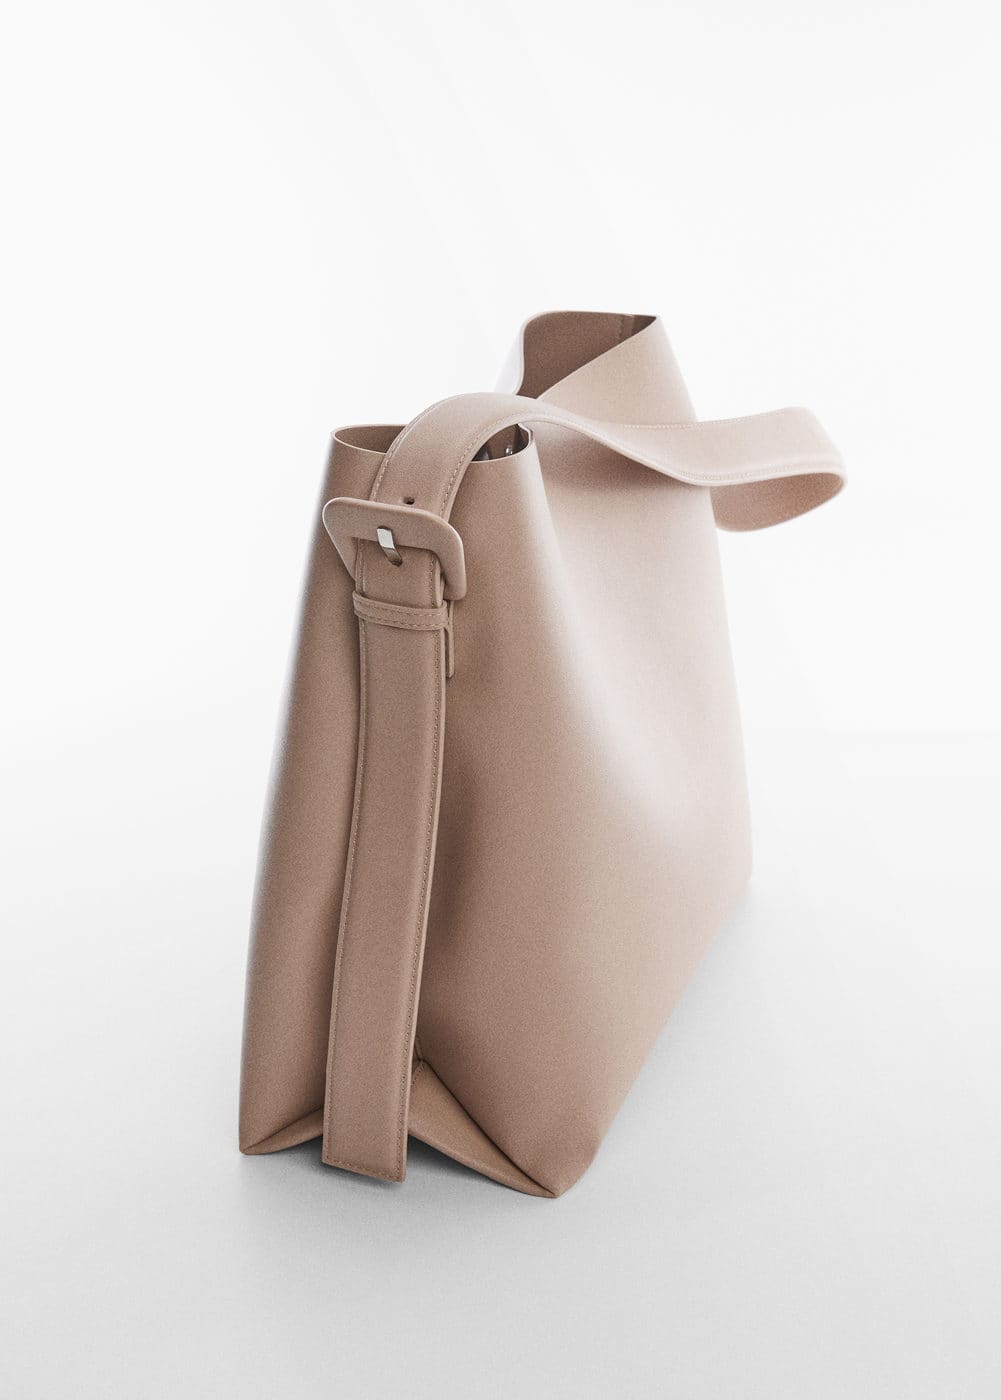 Nab Stars' Favorite Handbags – for Under $100!